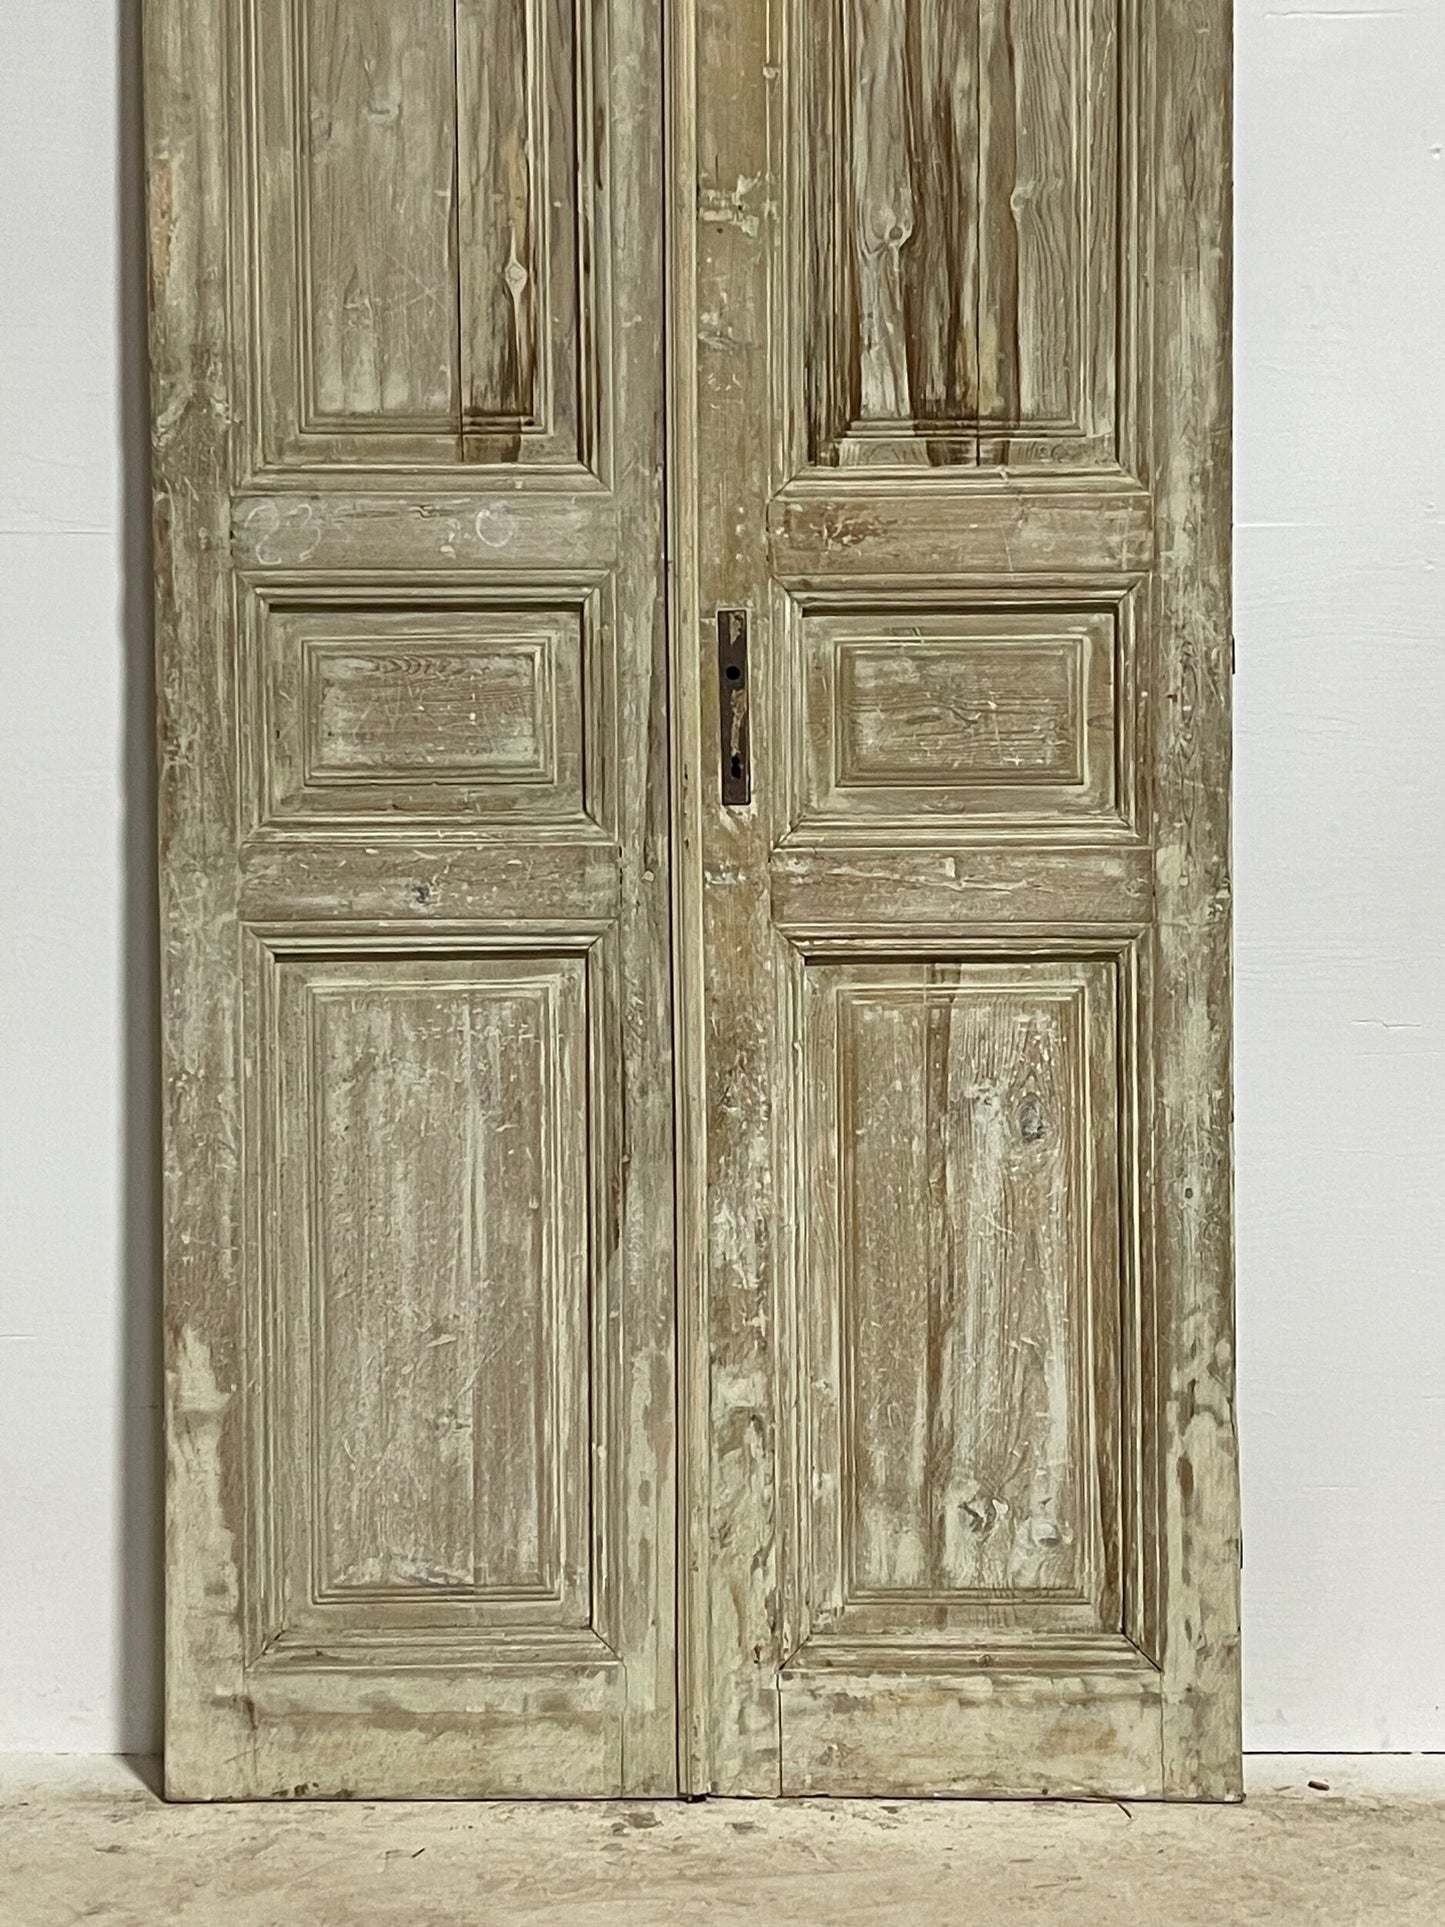 Antique French doors (93.5x40.5) H0156s